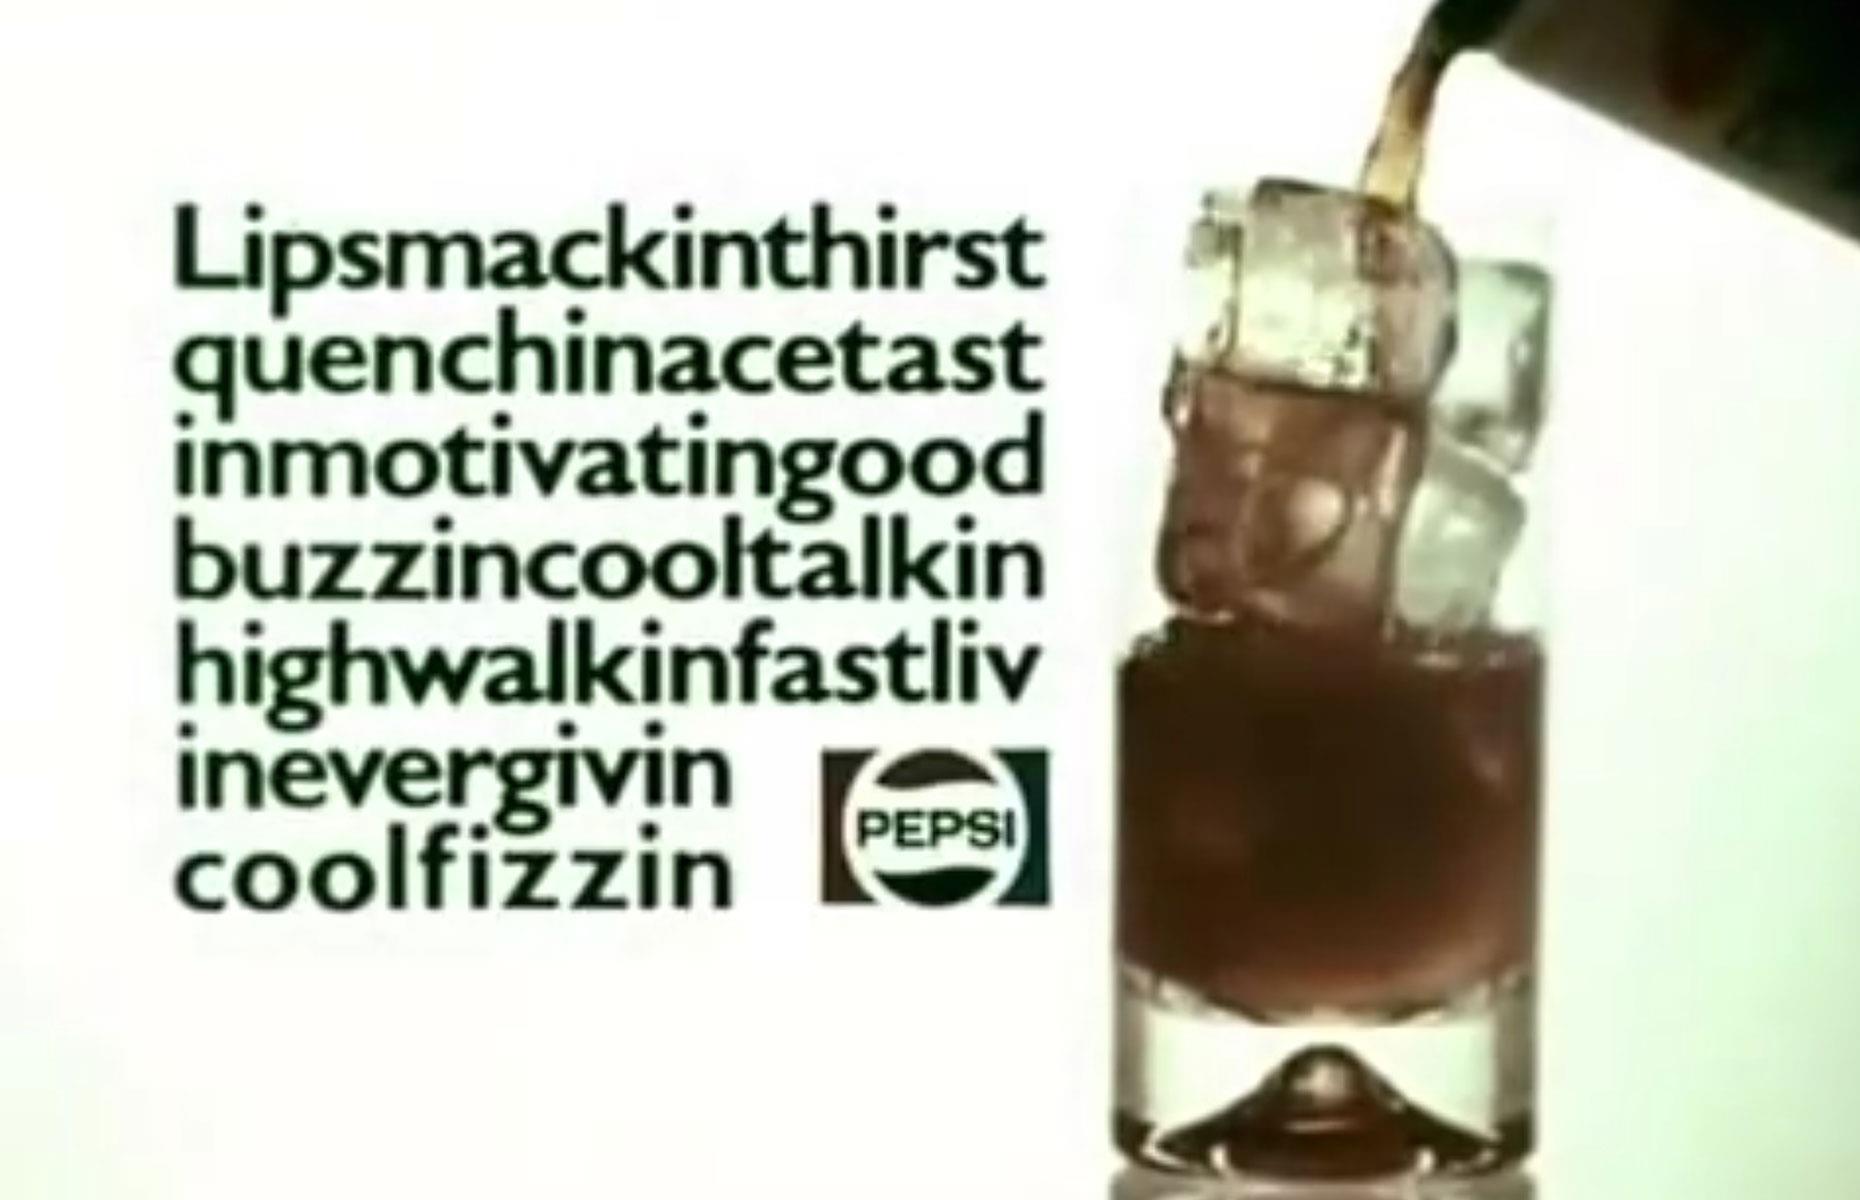 Lipsmackin', thirstquenchin', acetastin', motivatin', goodbuzzin', cooltalkin', highwalkin', fastlivin', evergivin', coolfizzin' Pepsi – Pepsi